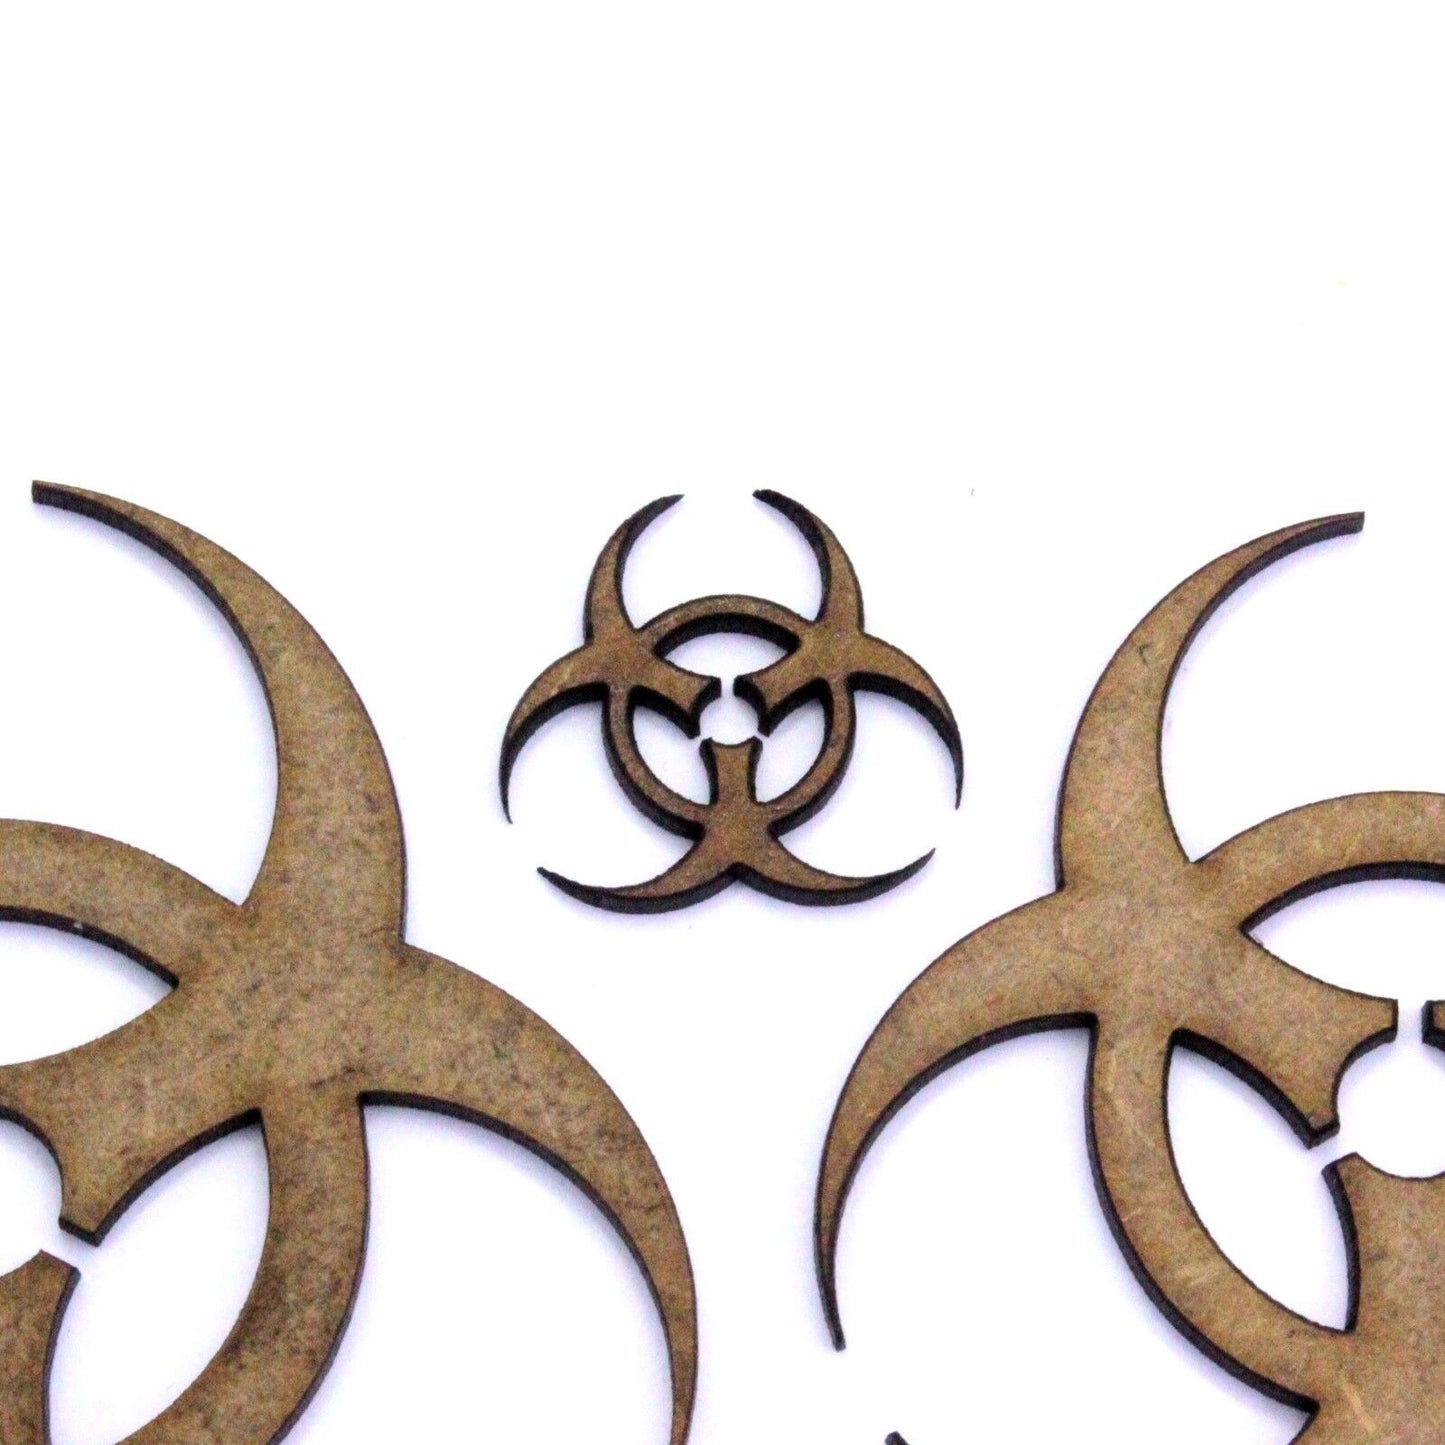 Biohazard Symbol Craft Shape, Various Sizes, 2mm MDF Wood. Chemical, Environment